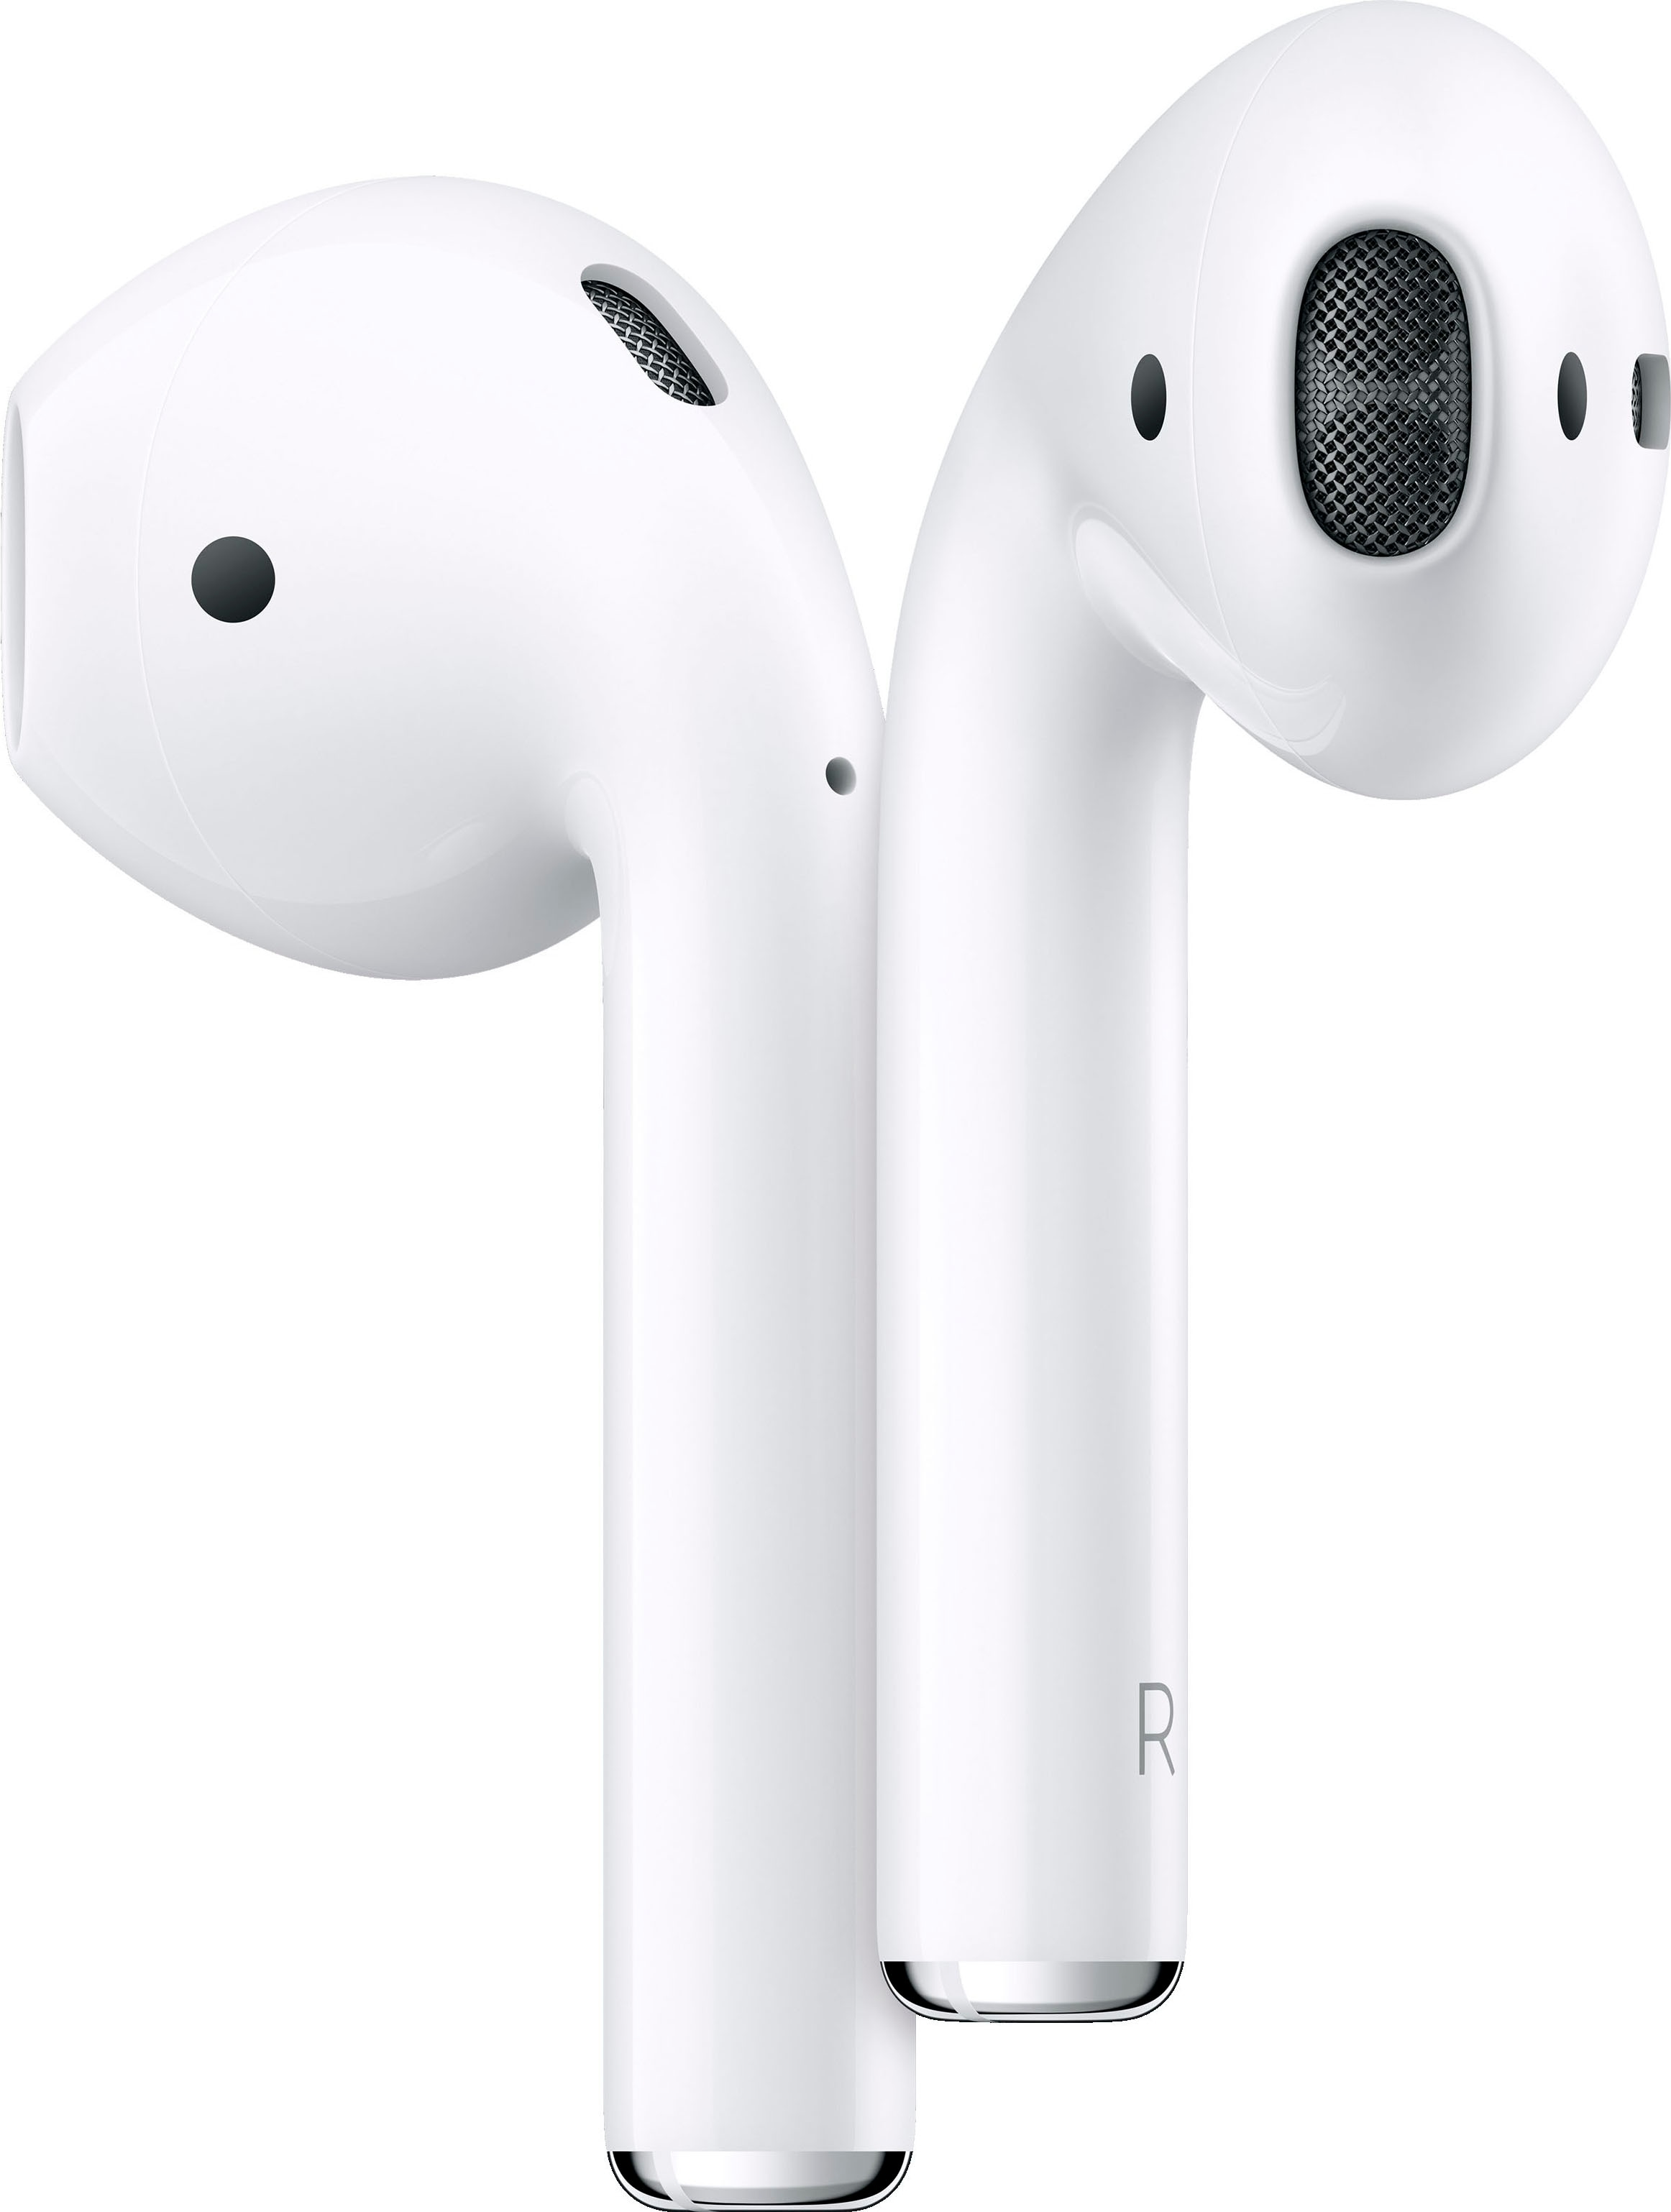 Watch, Mini, (2019)«, Mini Sprachsteuerung-True Apple Siri- iMac mit In-Ear-Kopfhörer Kompatibel mit Ladecase Air 2. | / BAUR Wireless-kompatibel / »AirPods Generation Mac Pro, Rauschunterdrückung, Bluetooth, mit iPhone,iPad